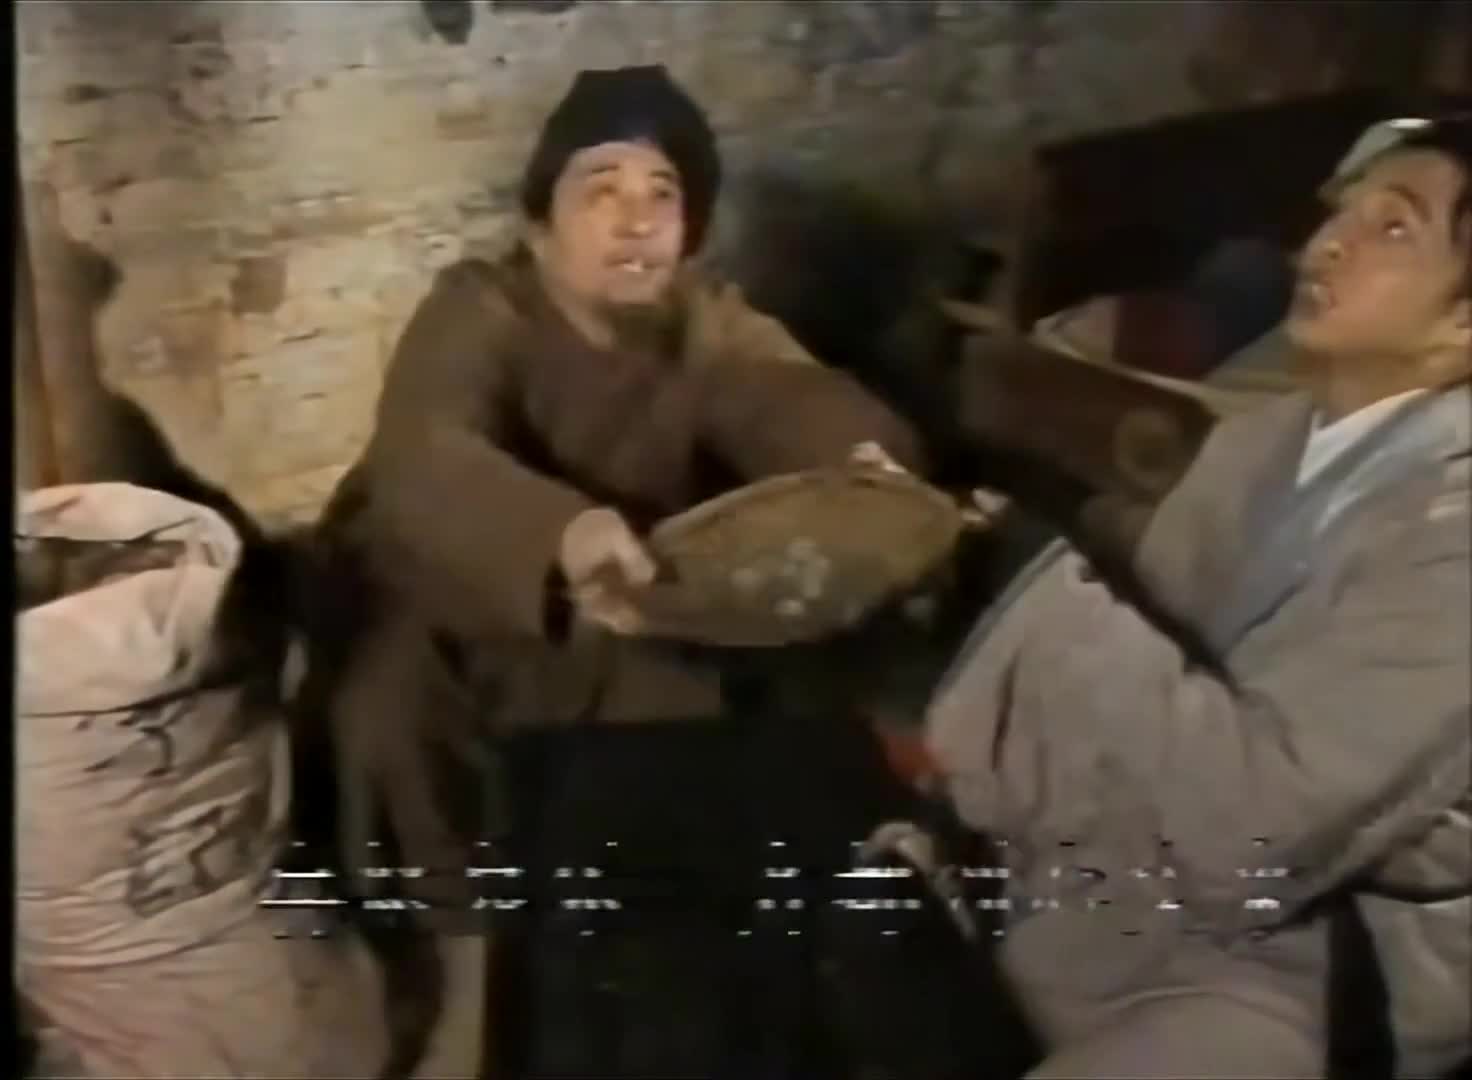 Liao Zhai (1987)